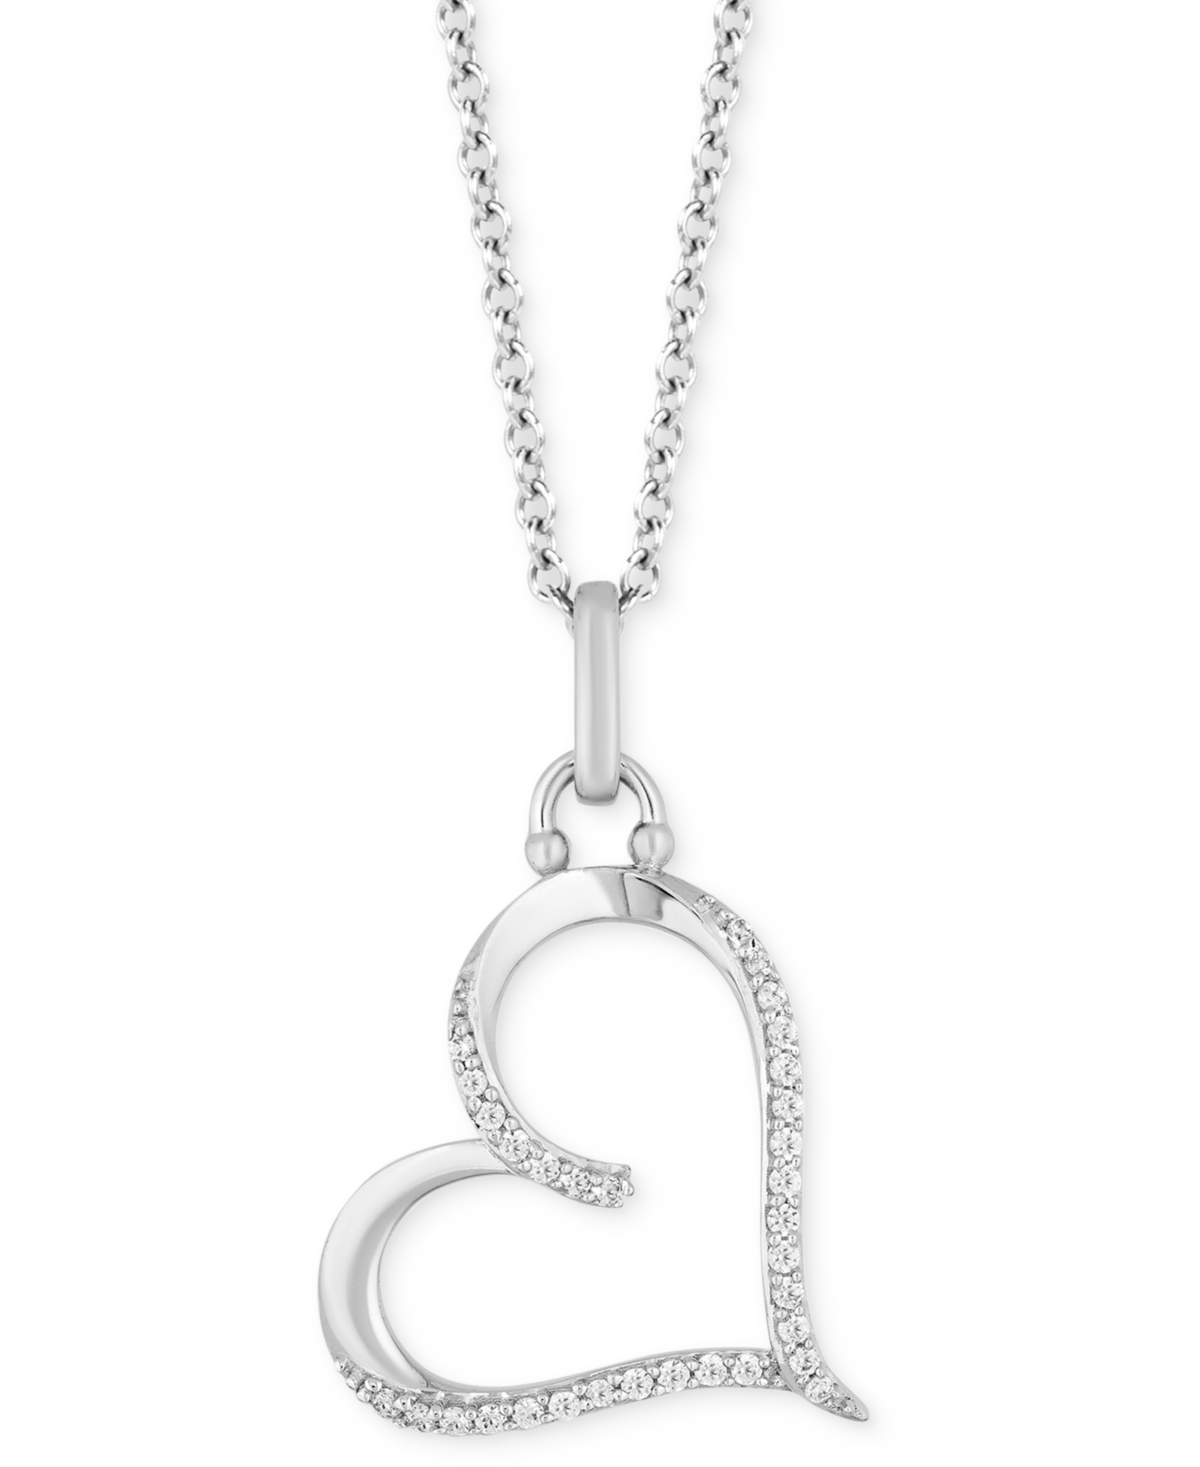 Hallmark Diamonds Tokens by Hallmark Diamonds Heart Love pendant (1/10 ct. t.w.) in Sterling Silver, 16" + 2" extender